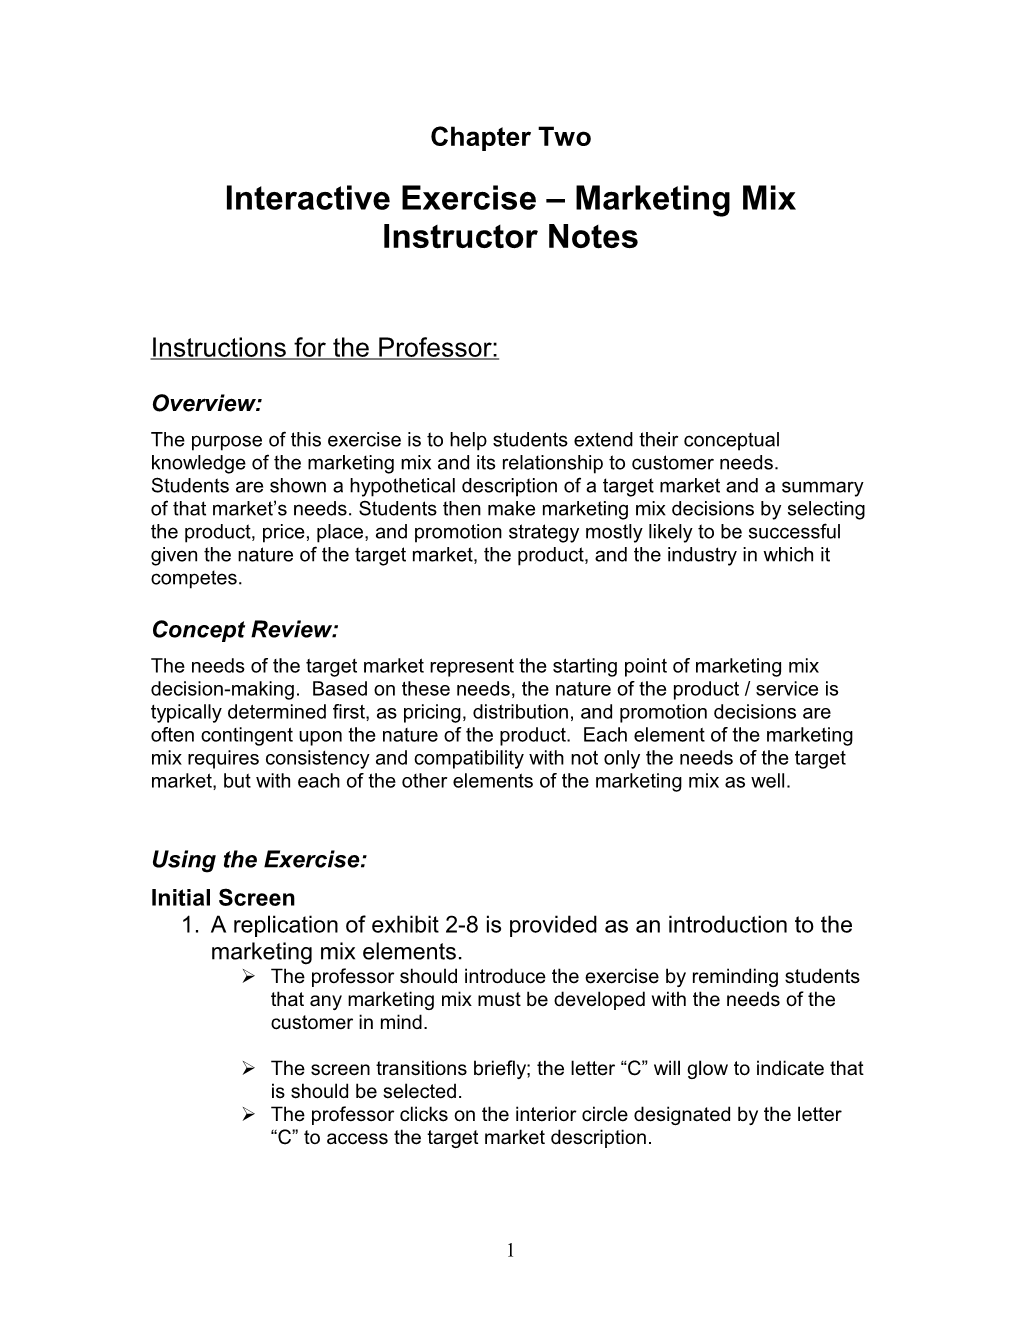 Interactive Exercise Marketing Mix